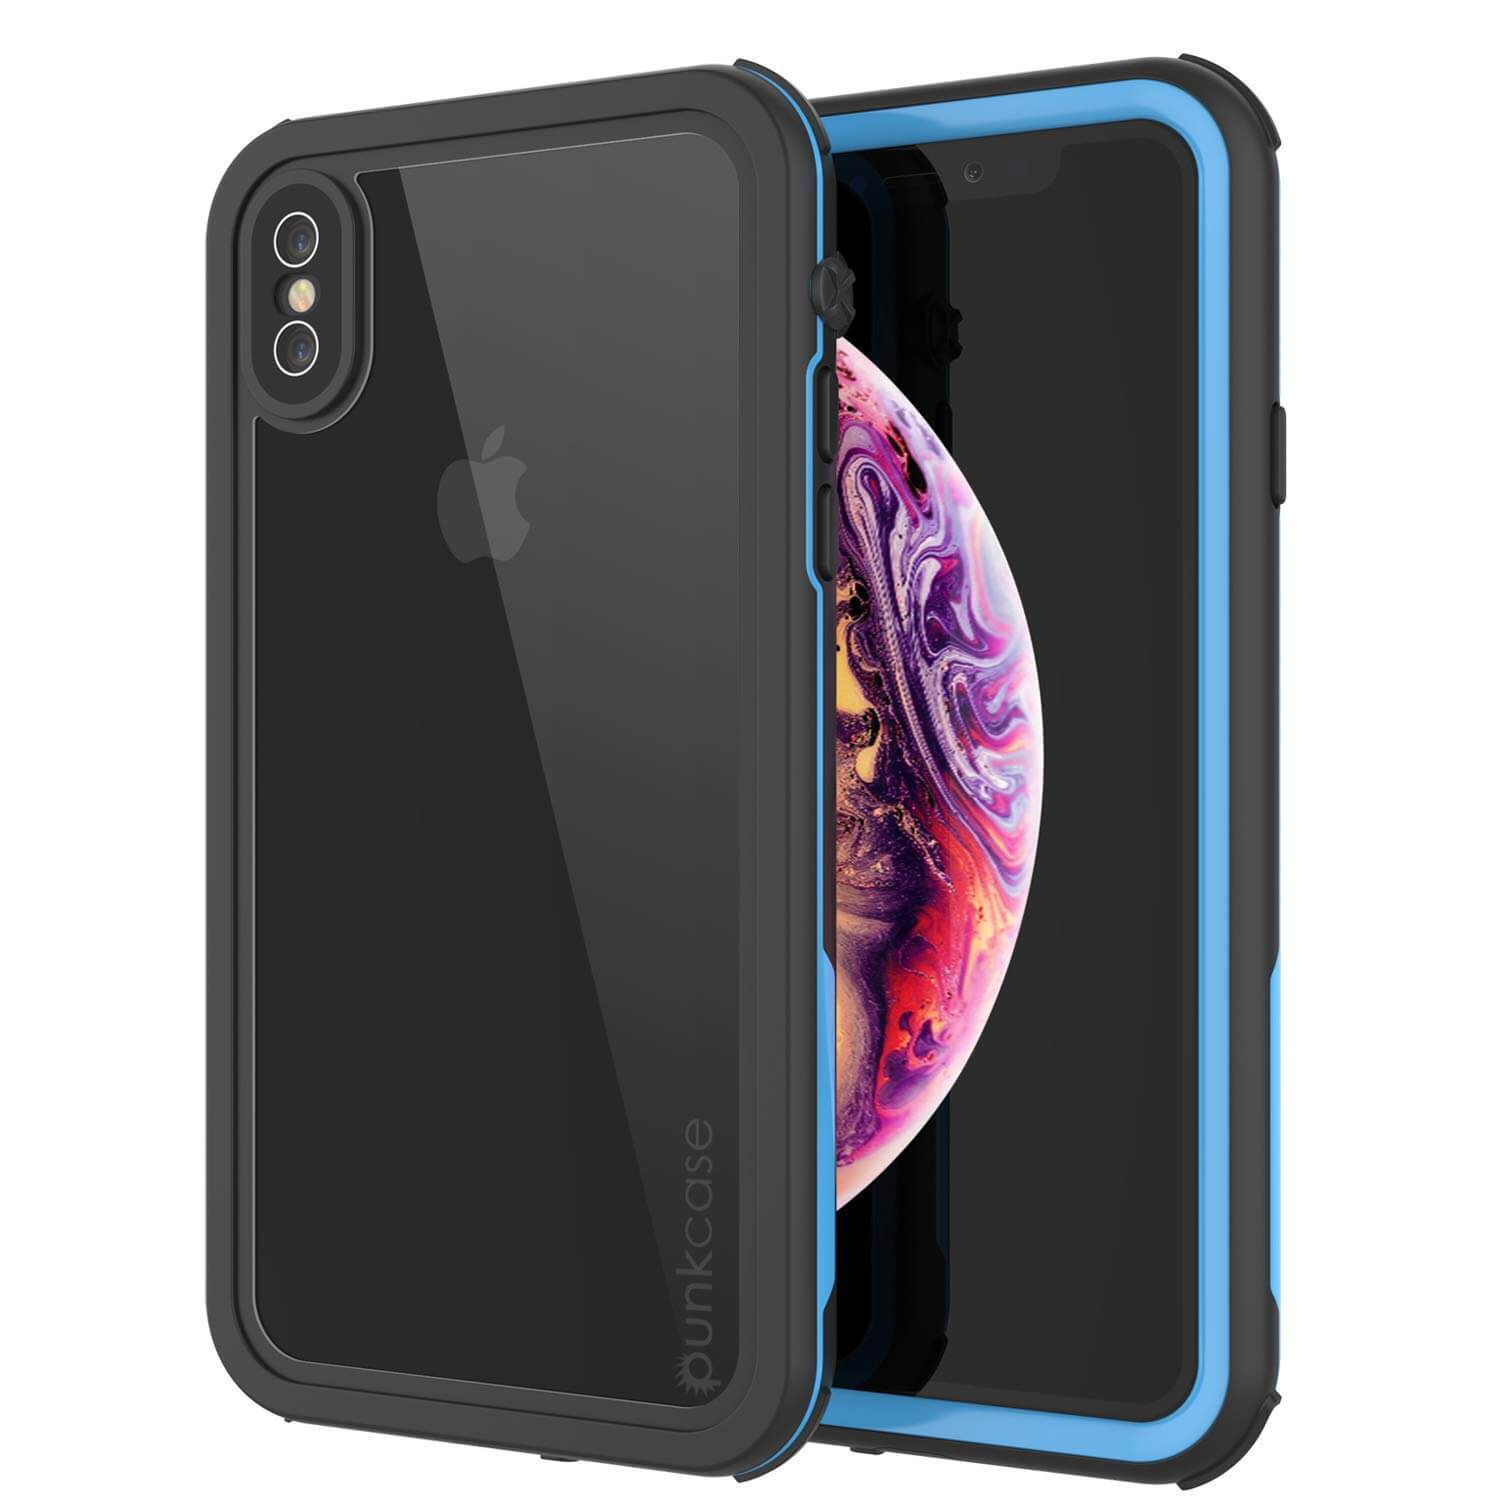 iPhone XS Waterproof IP68 Case, Punkcase [Blue] [Rapture Series]  W/Built in Screen Protector